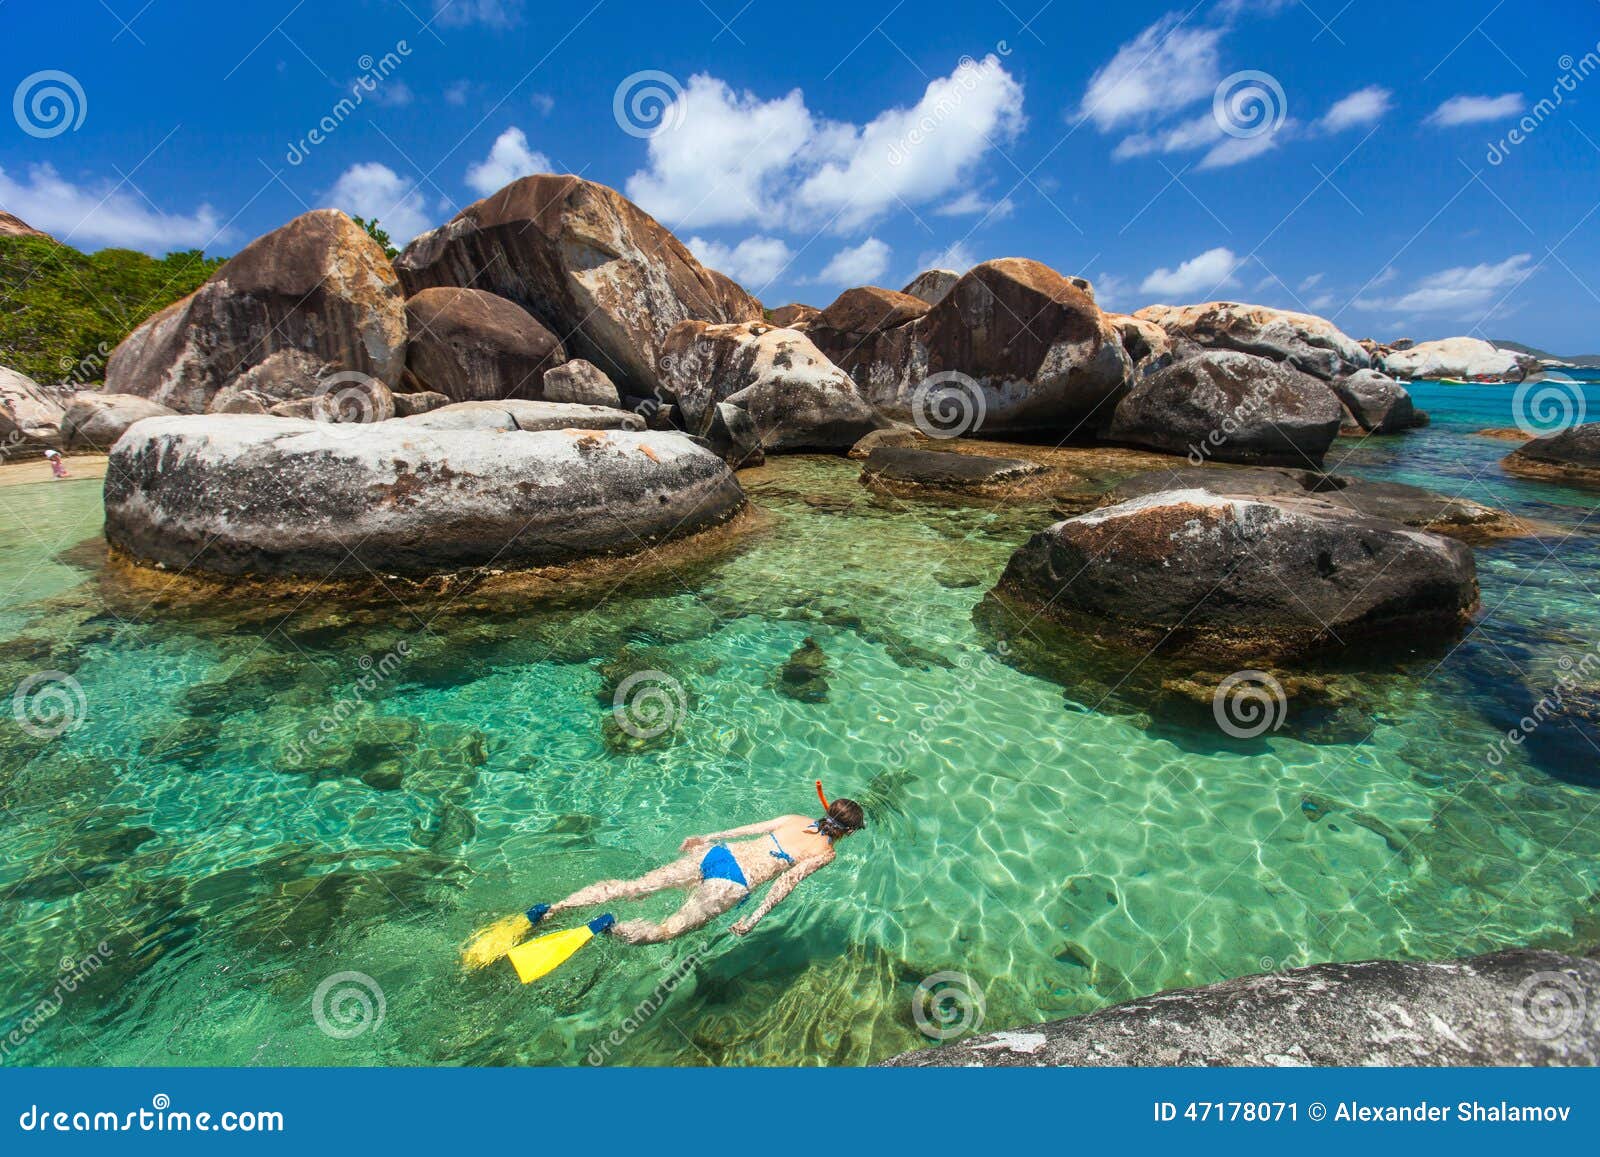 woman snorkeling at tropical water